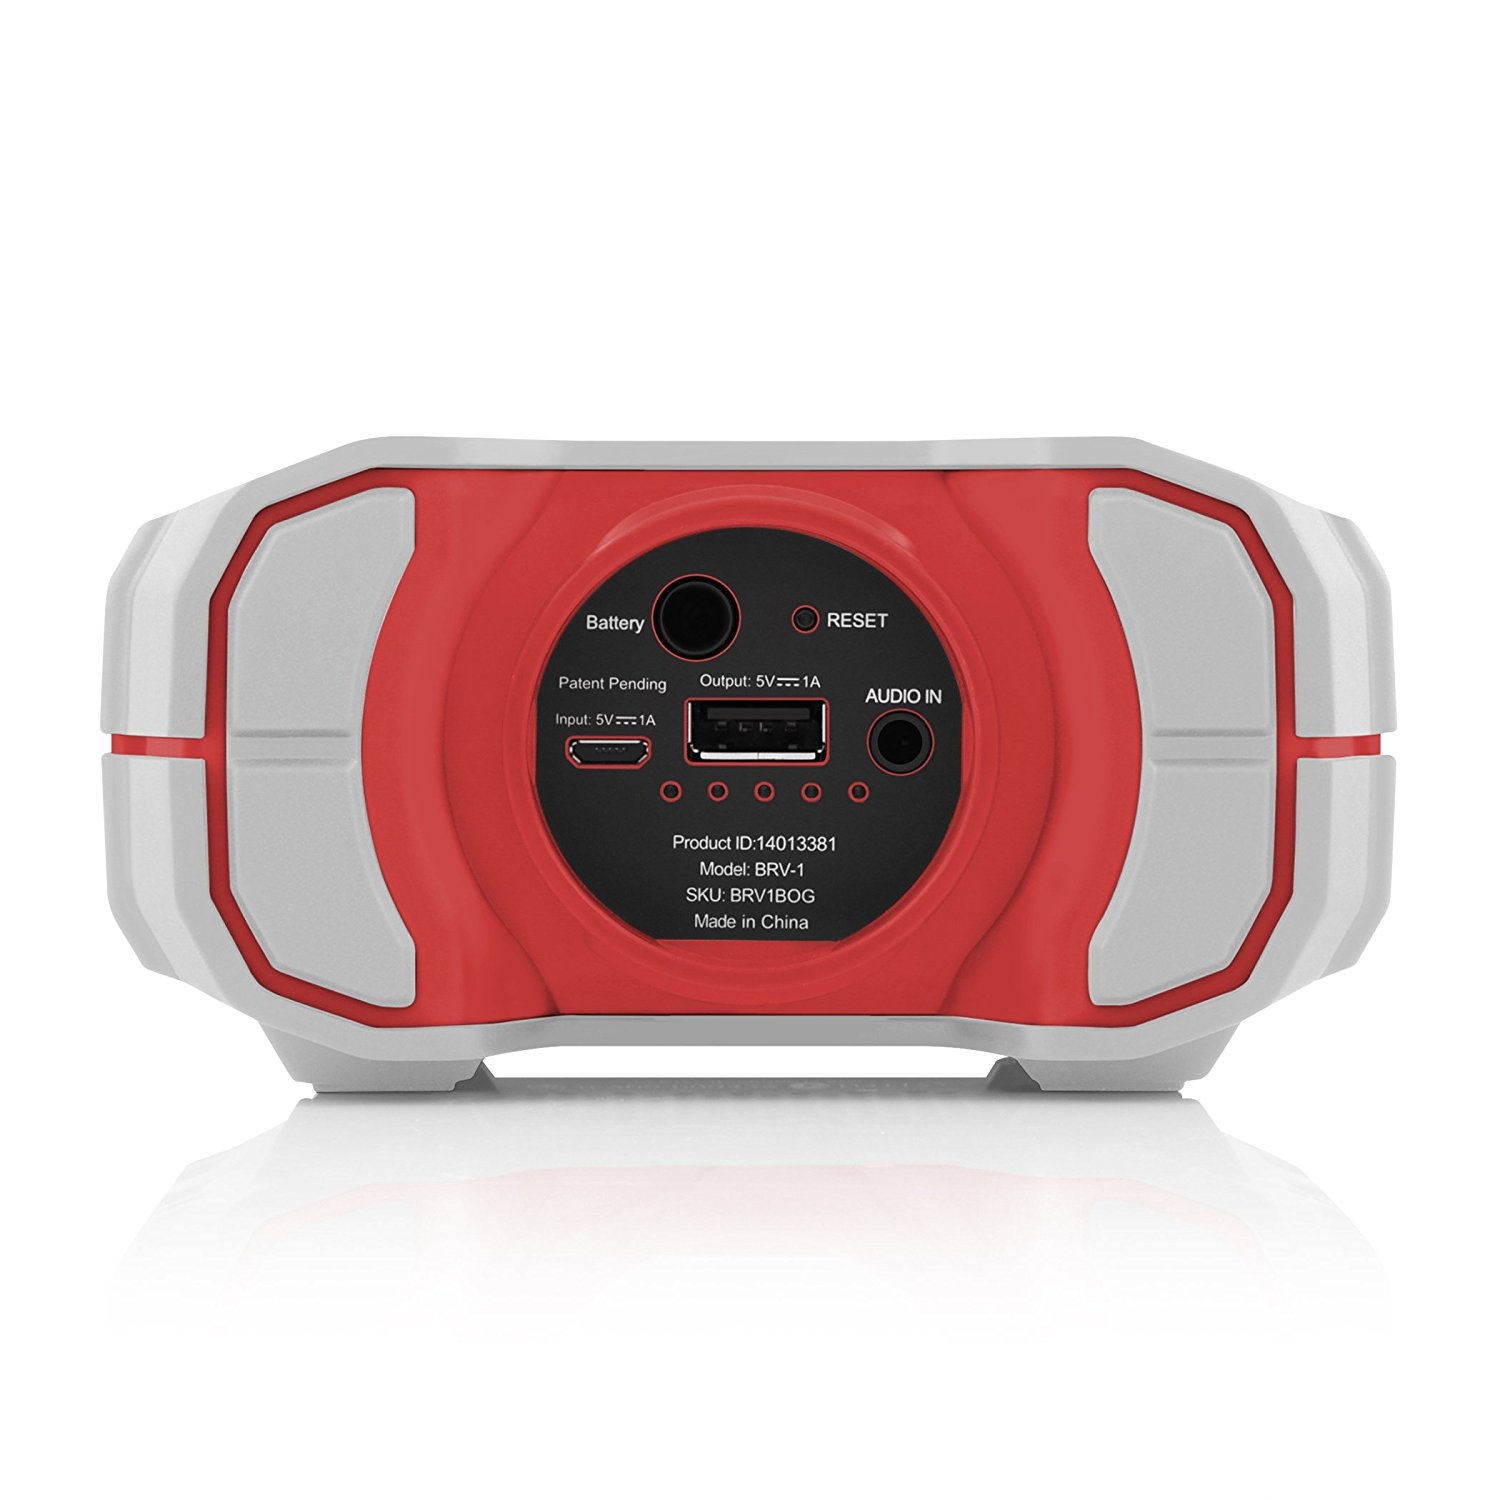 Braven BRV-1 Portable Wireless Waterproof Bluetooth Speaker with